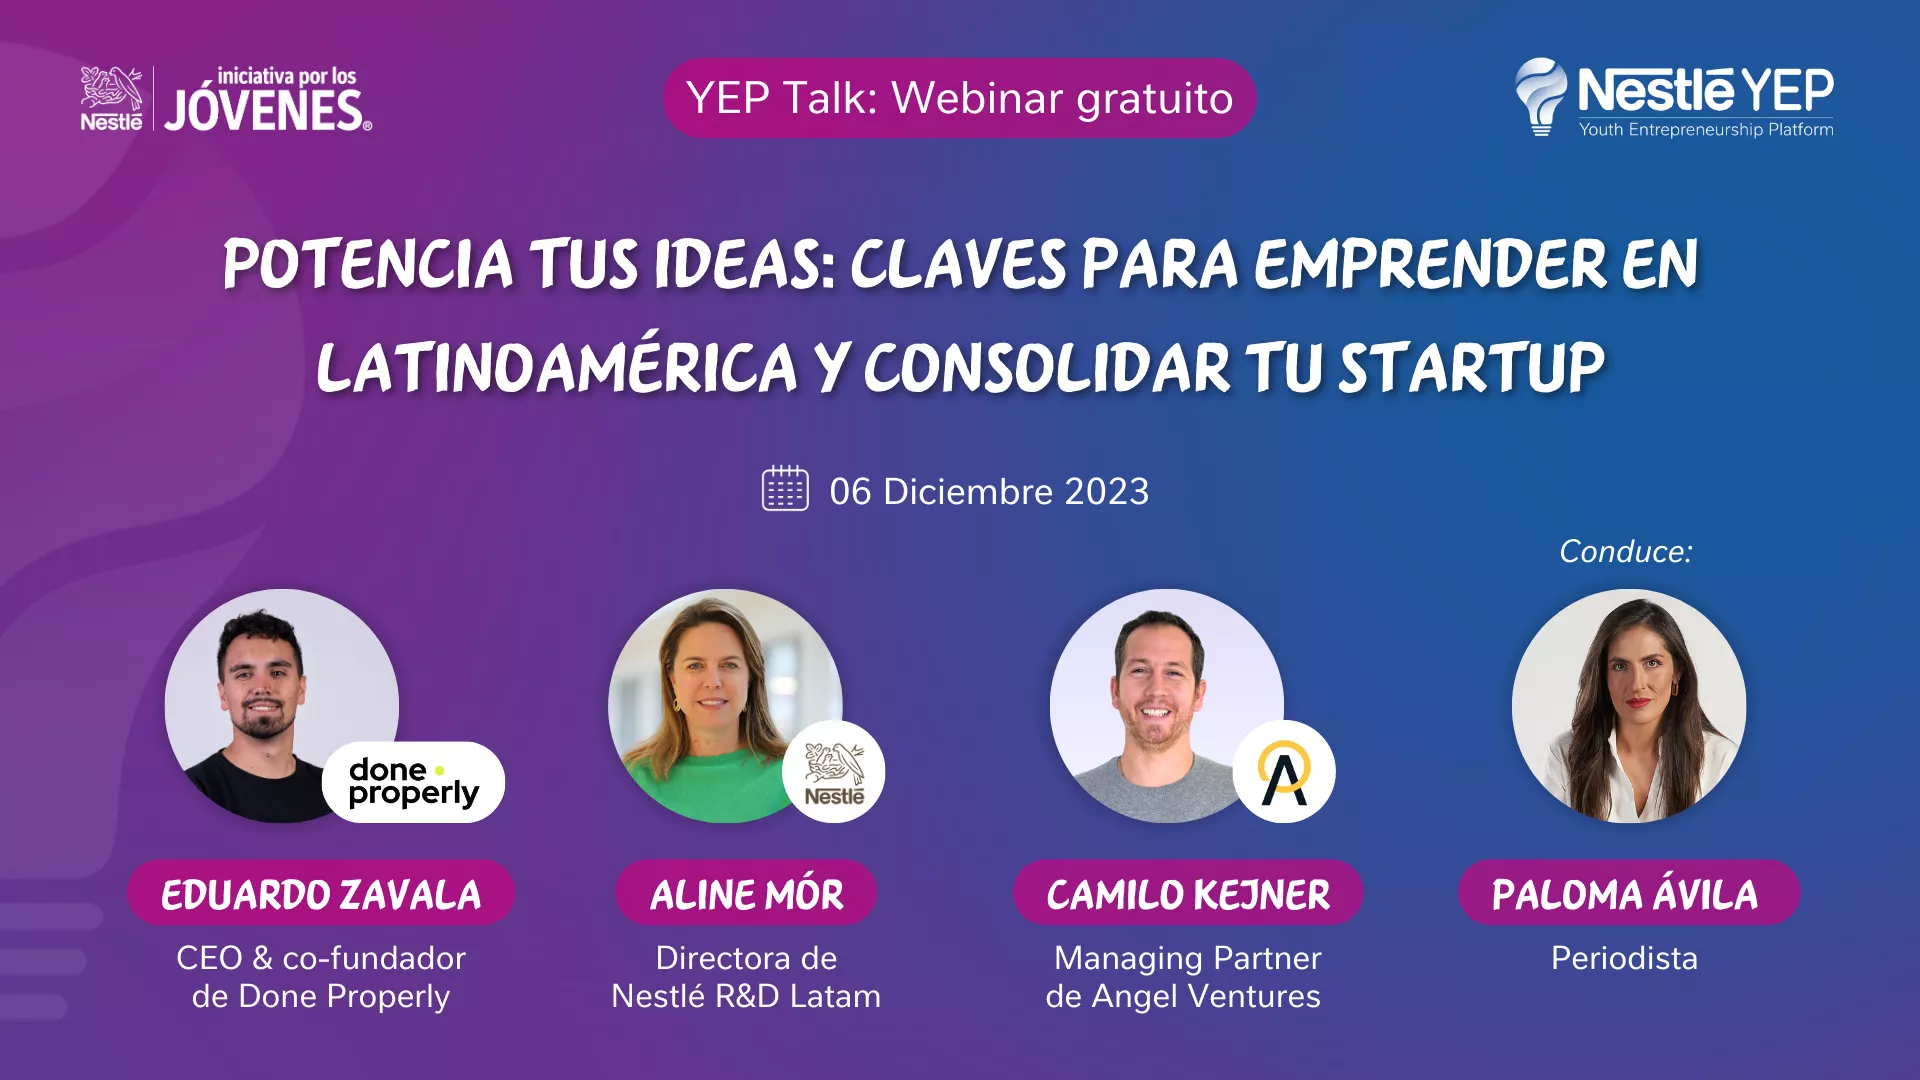 Nestlé YEP Talk Latinoamerica